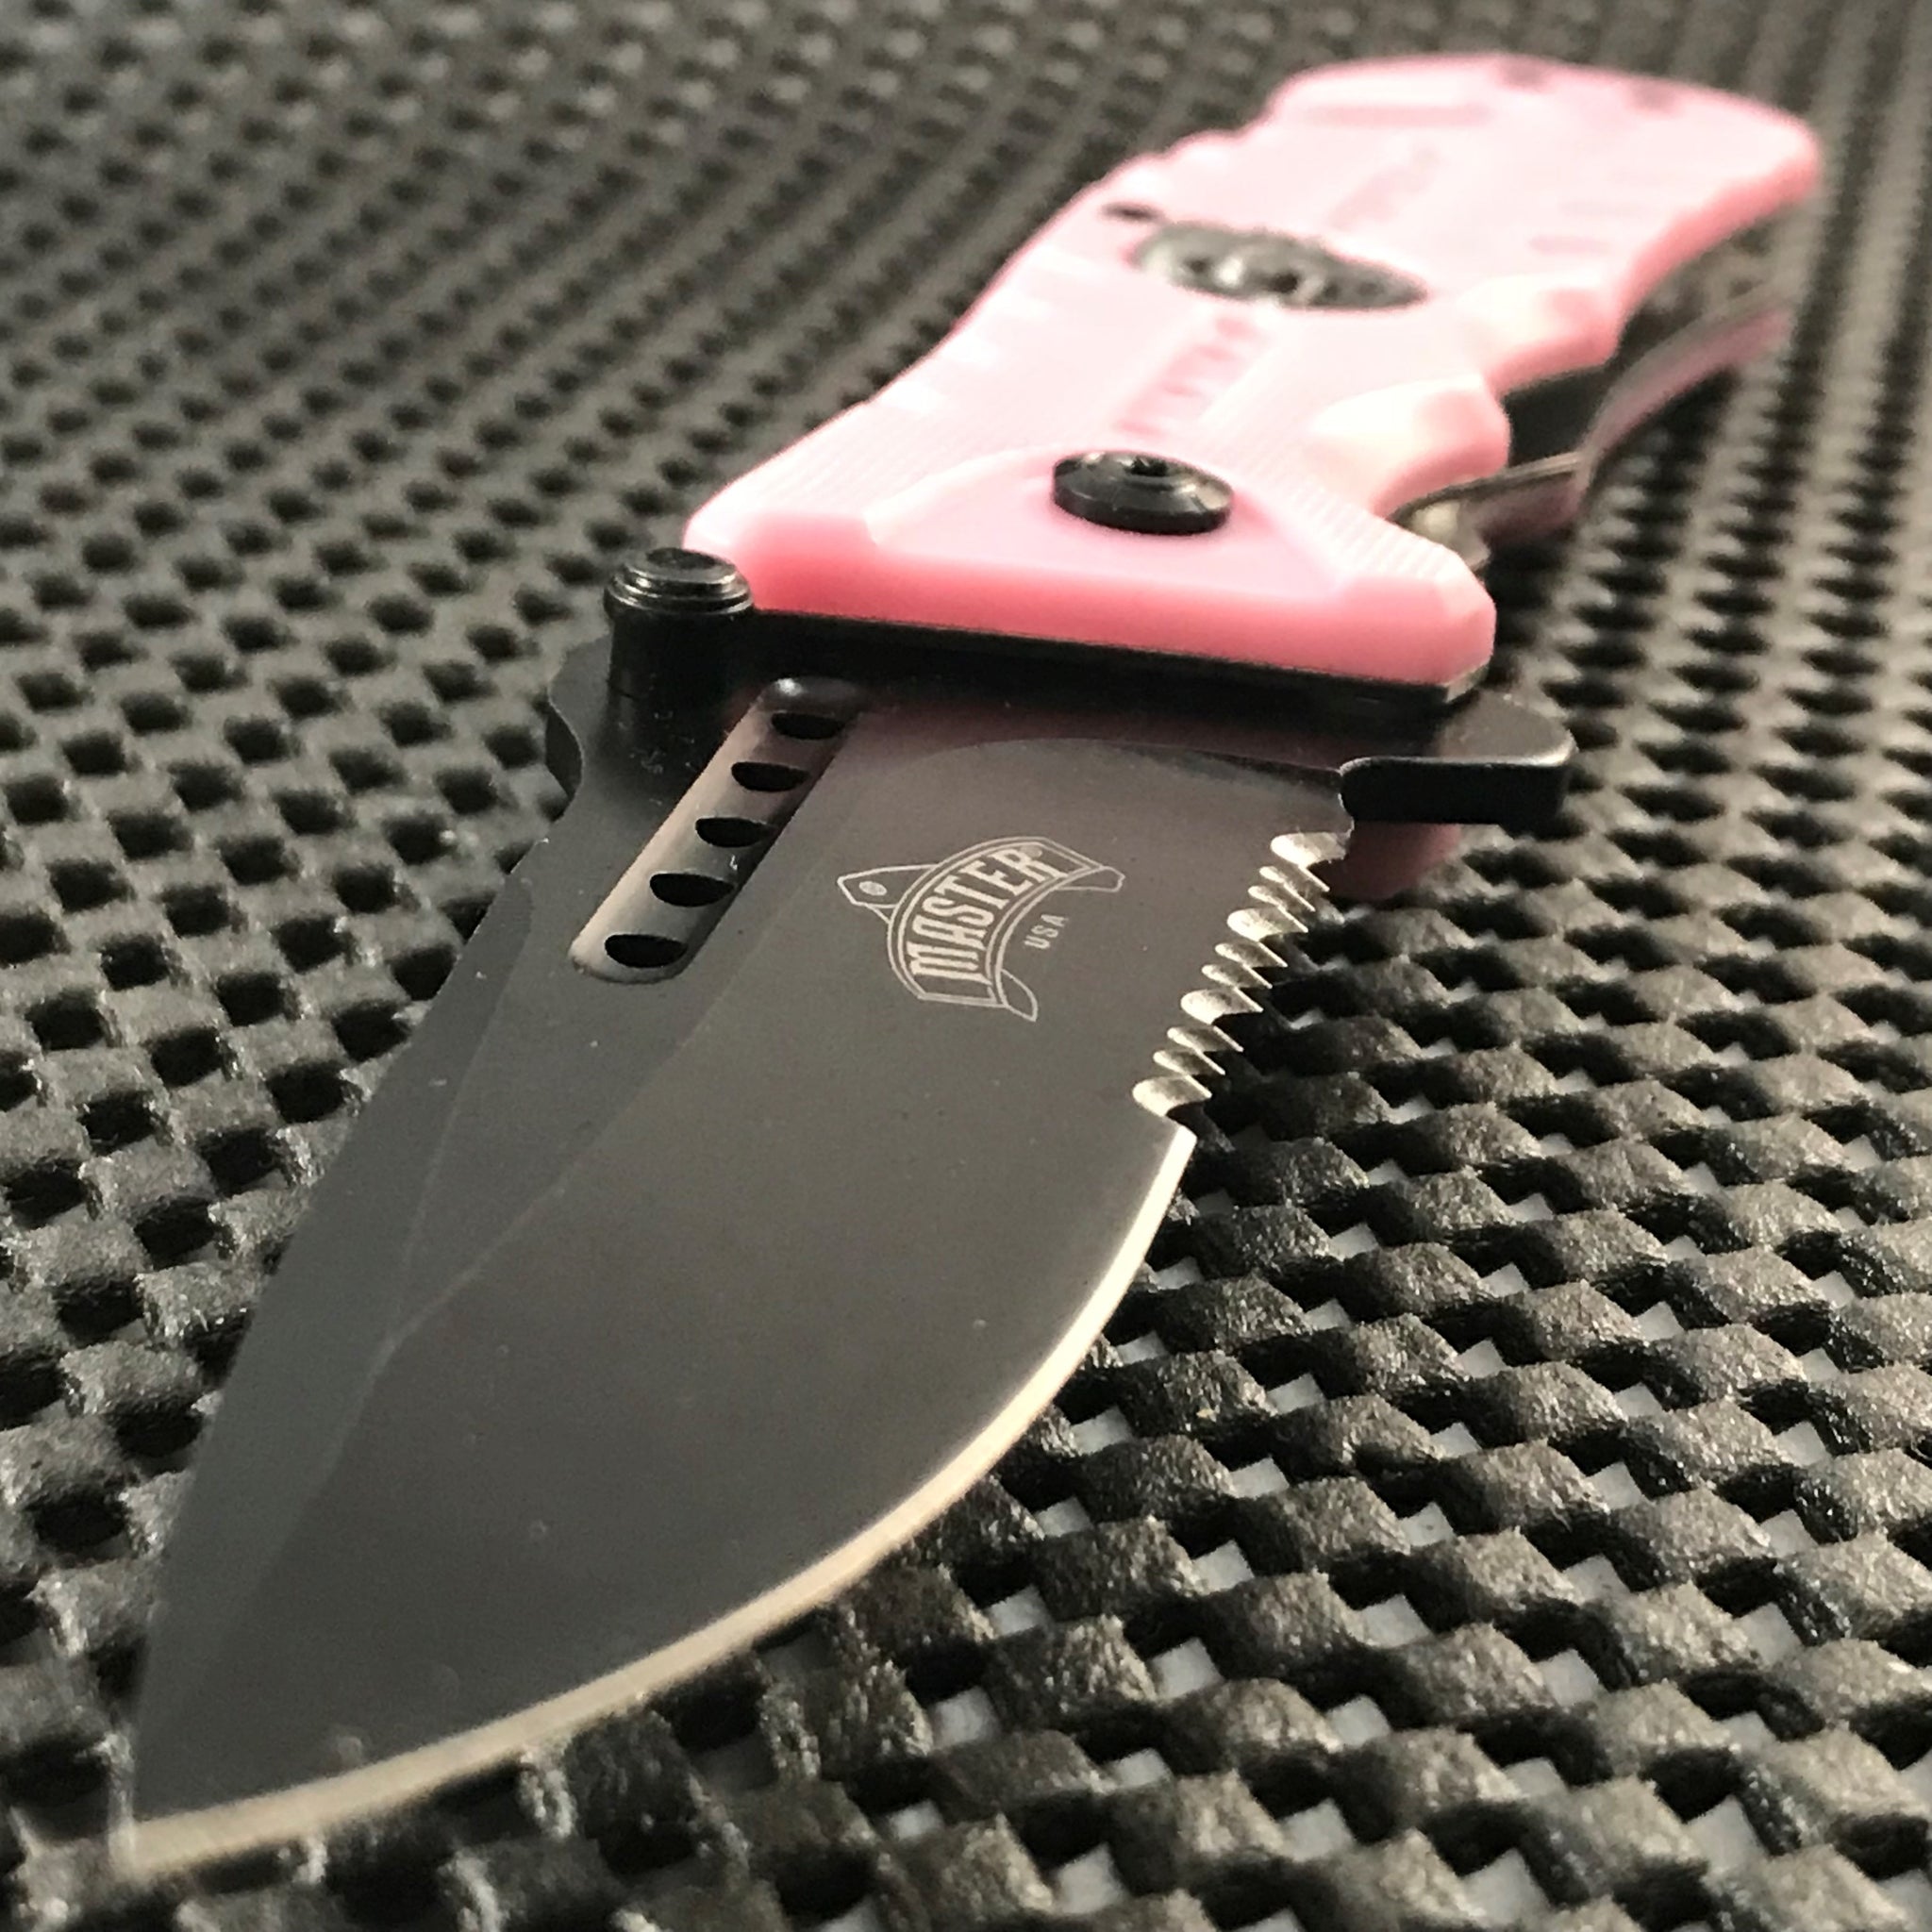  Master Pink Skull Medallion Tactical Blade Rescue Pocket Knife  : Sports & Outdoors